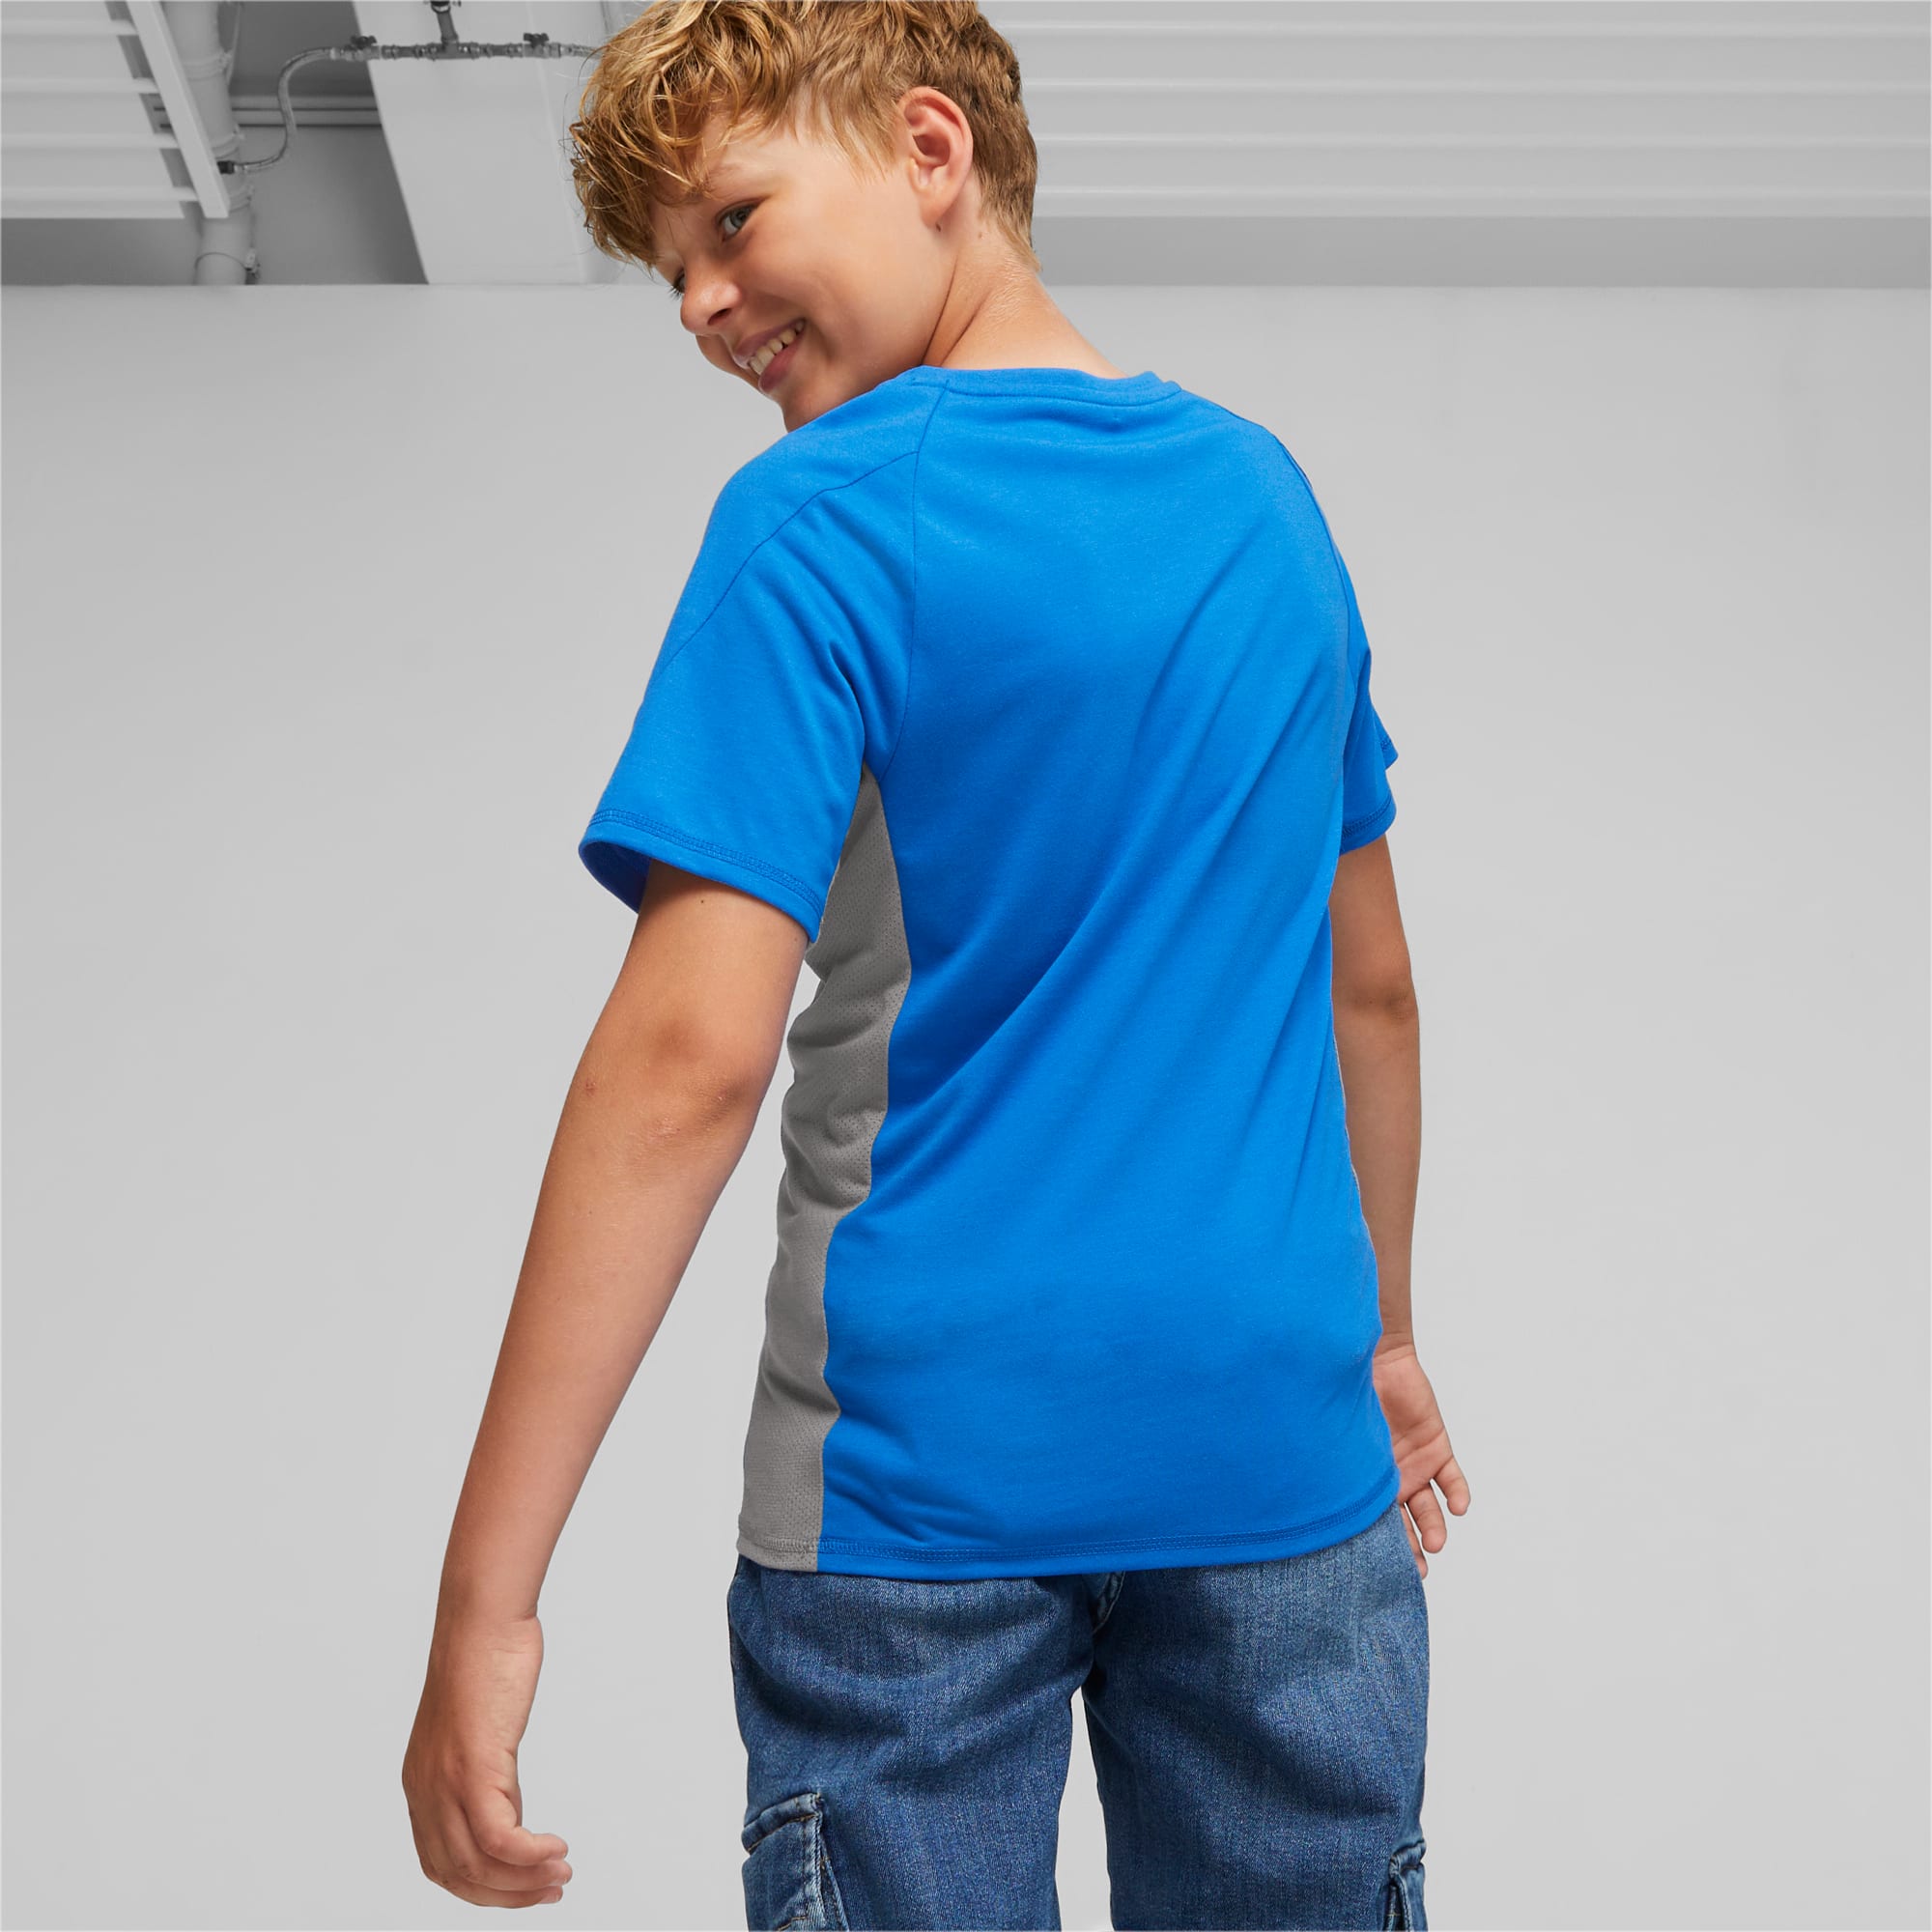 PUMA Evostripe Youth T-Shirt, Racing Blue, Size 116, Clothing